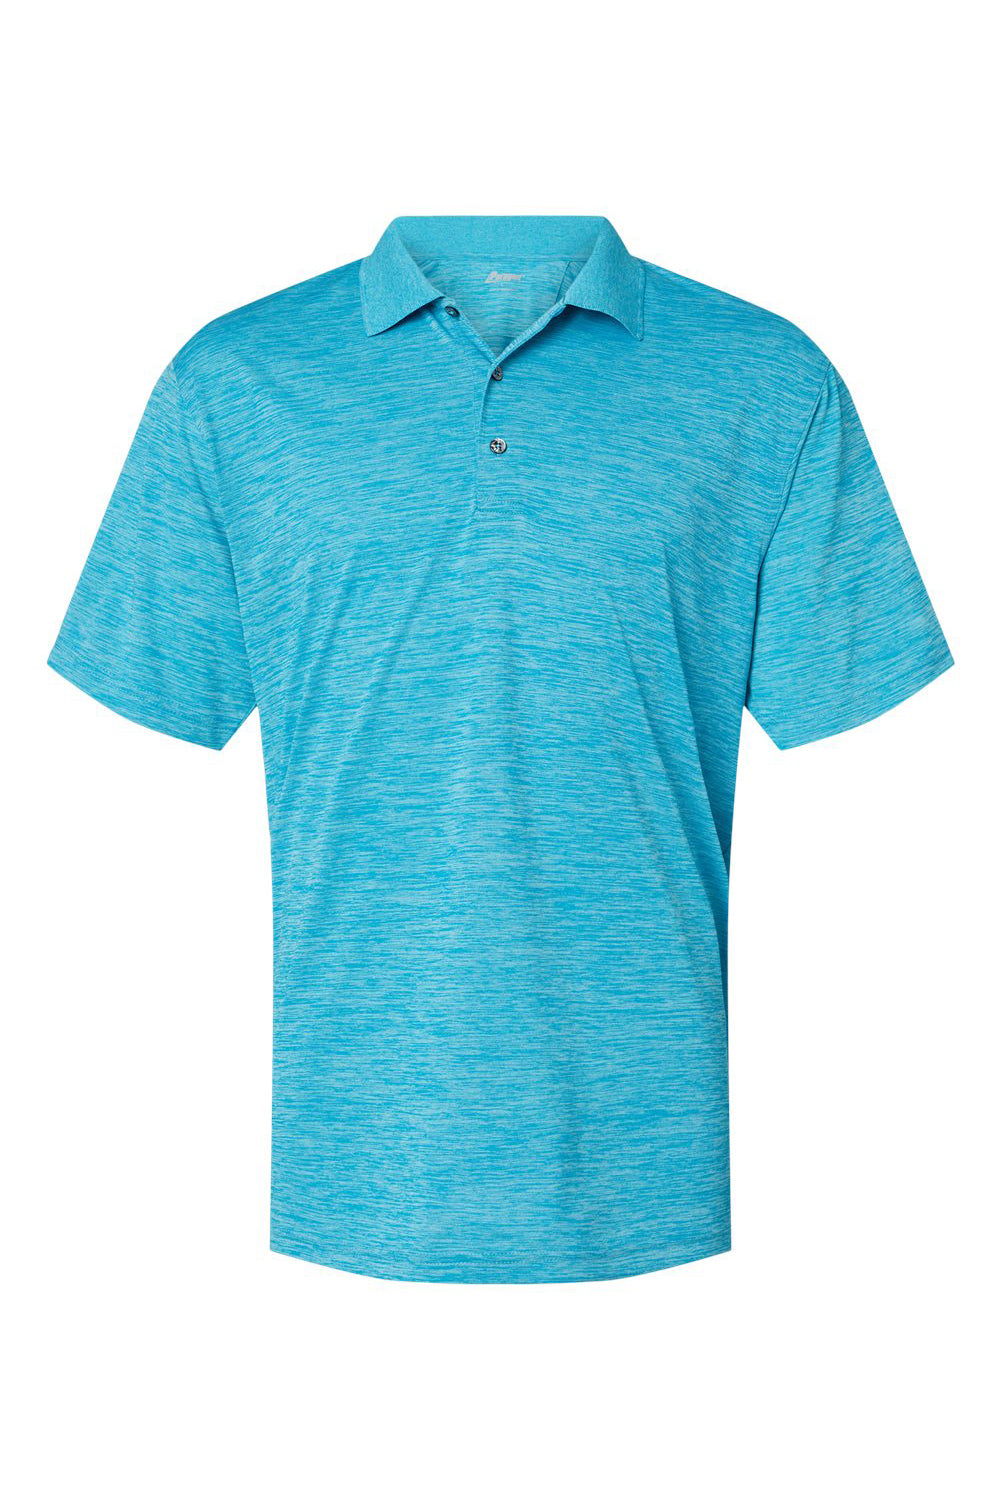 Paragon 130 Mens Dakota Striated Short Sleeve Polo Shirt Heather Turquoise Blue Flat Front